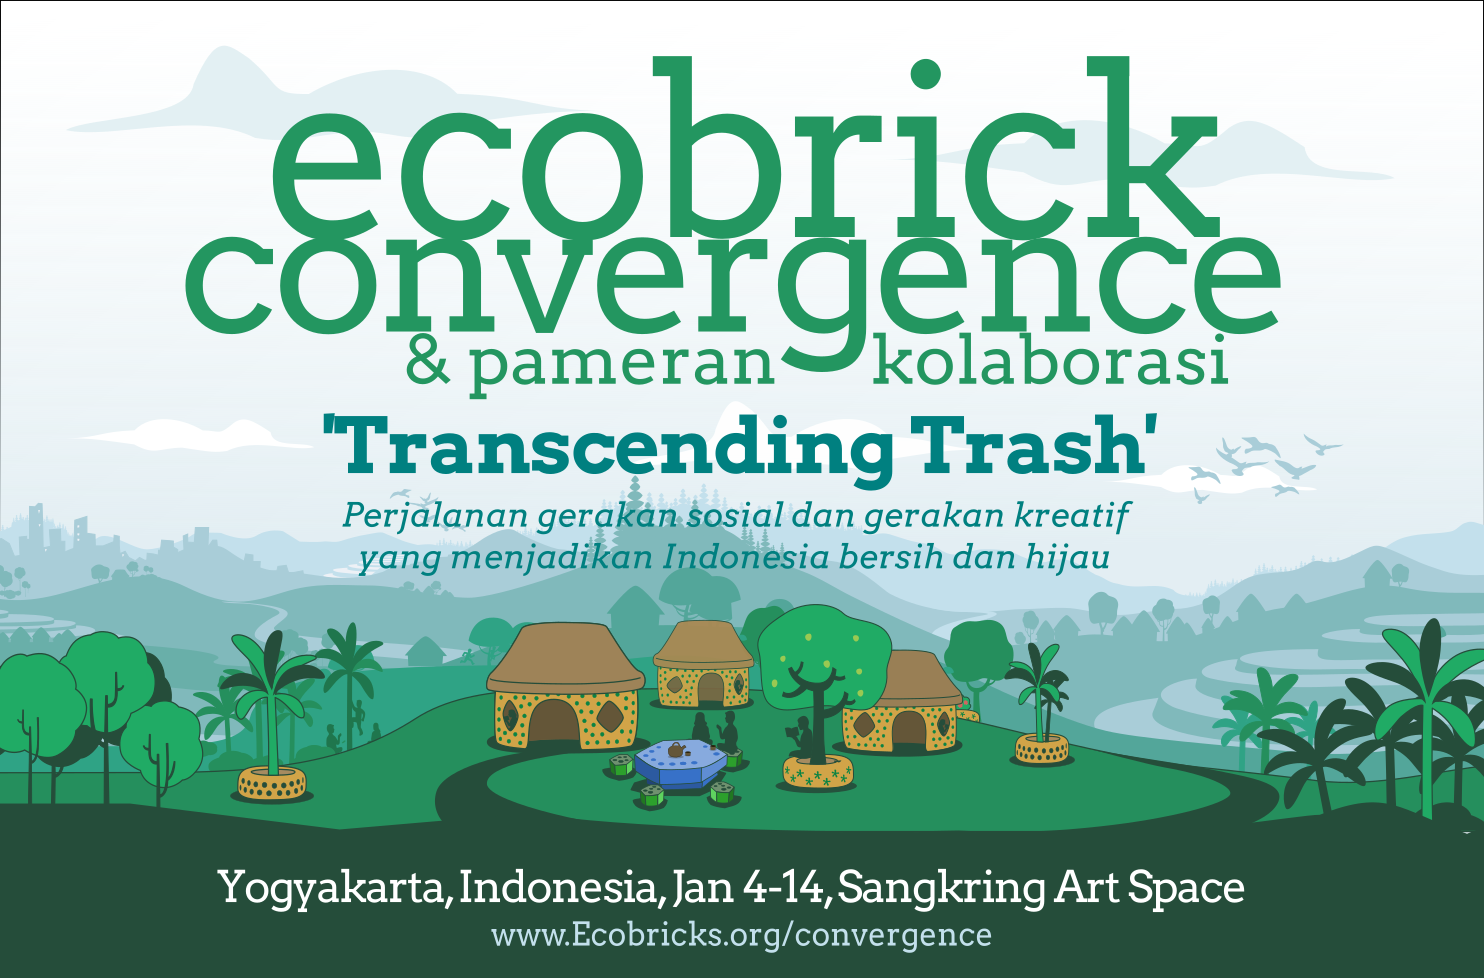 Ecobrick Convergence Art Exhibition